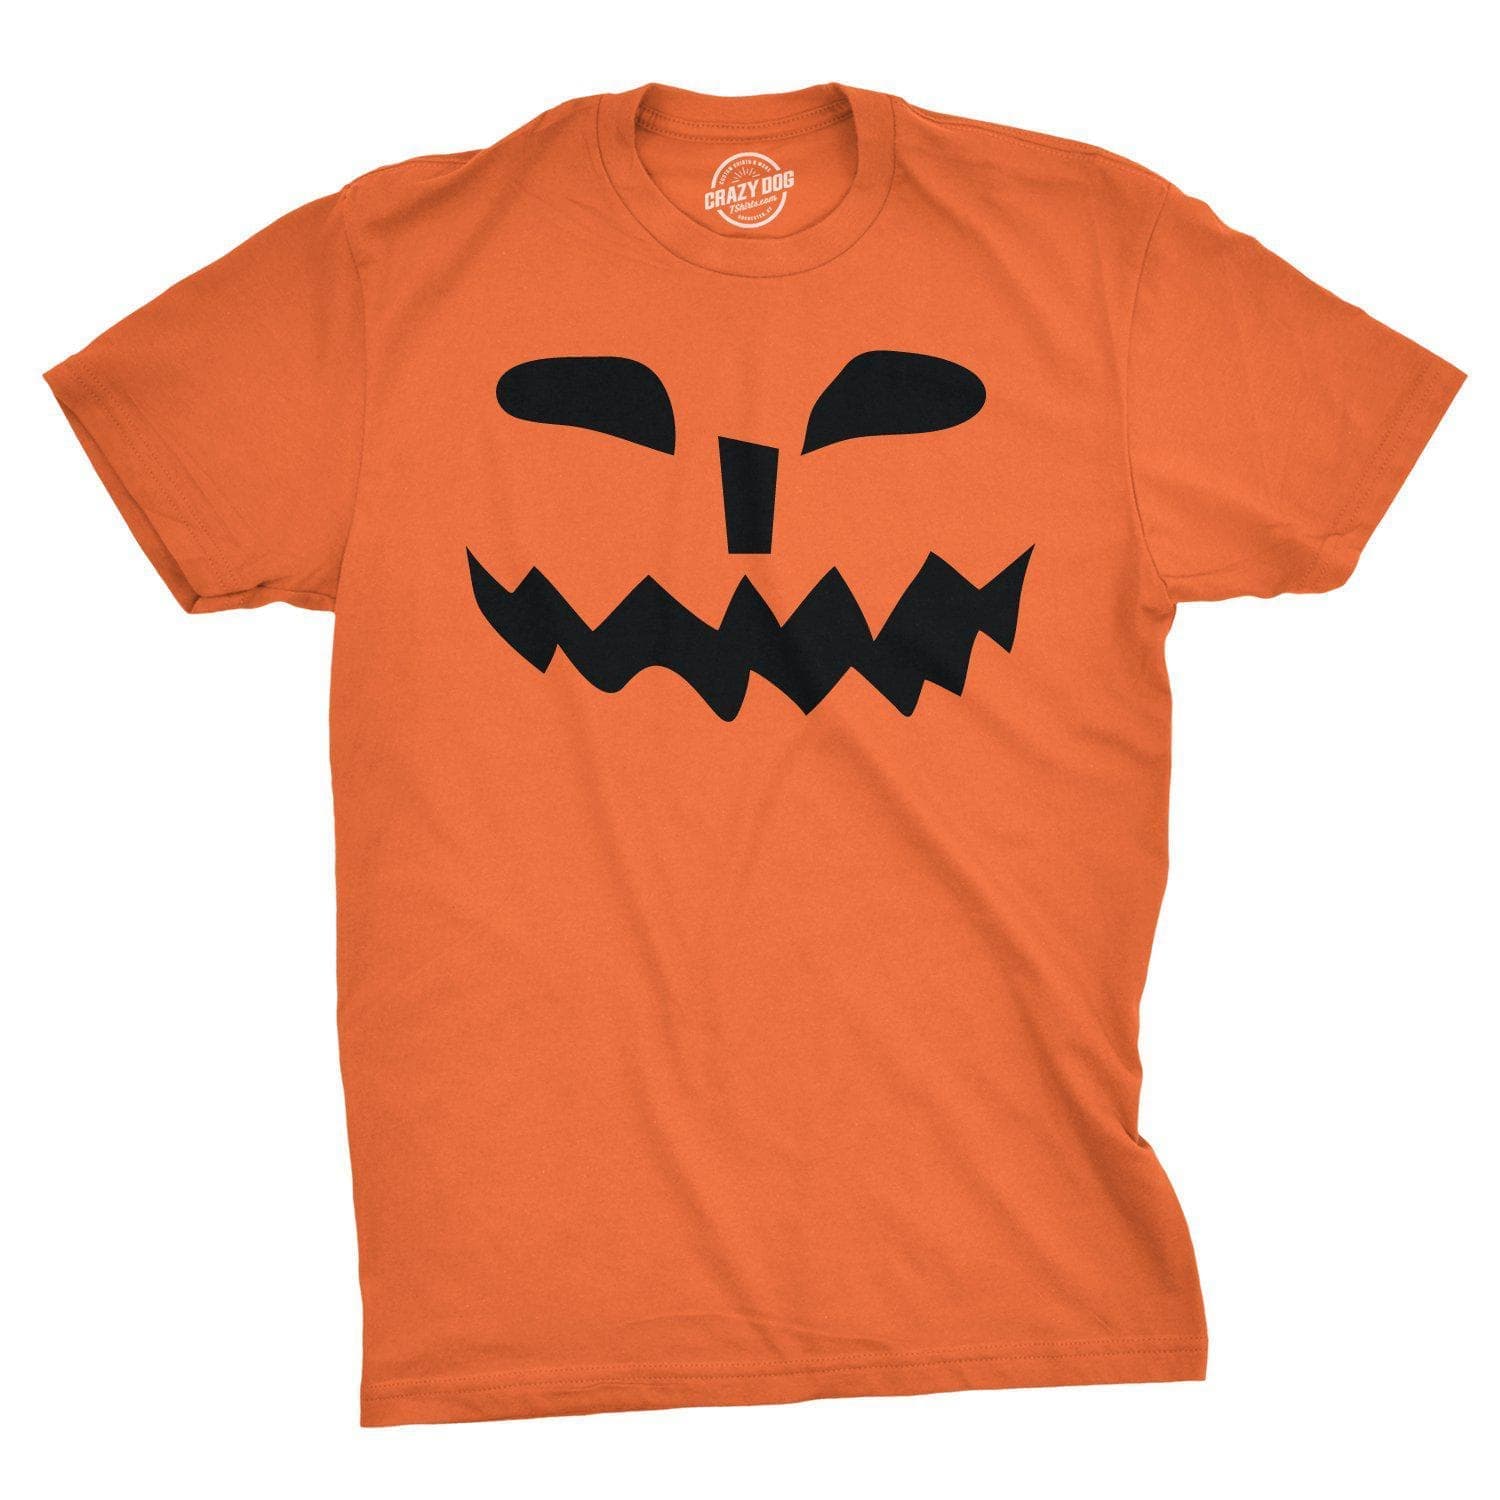 Spikey Teeth Pumpkin Face Men's Tshirt - Crazy Dog T-Shirts